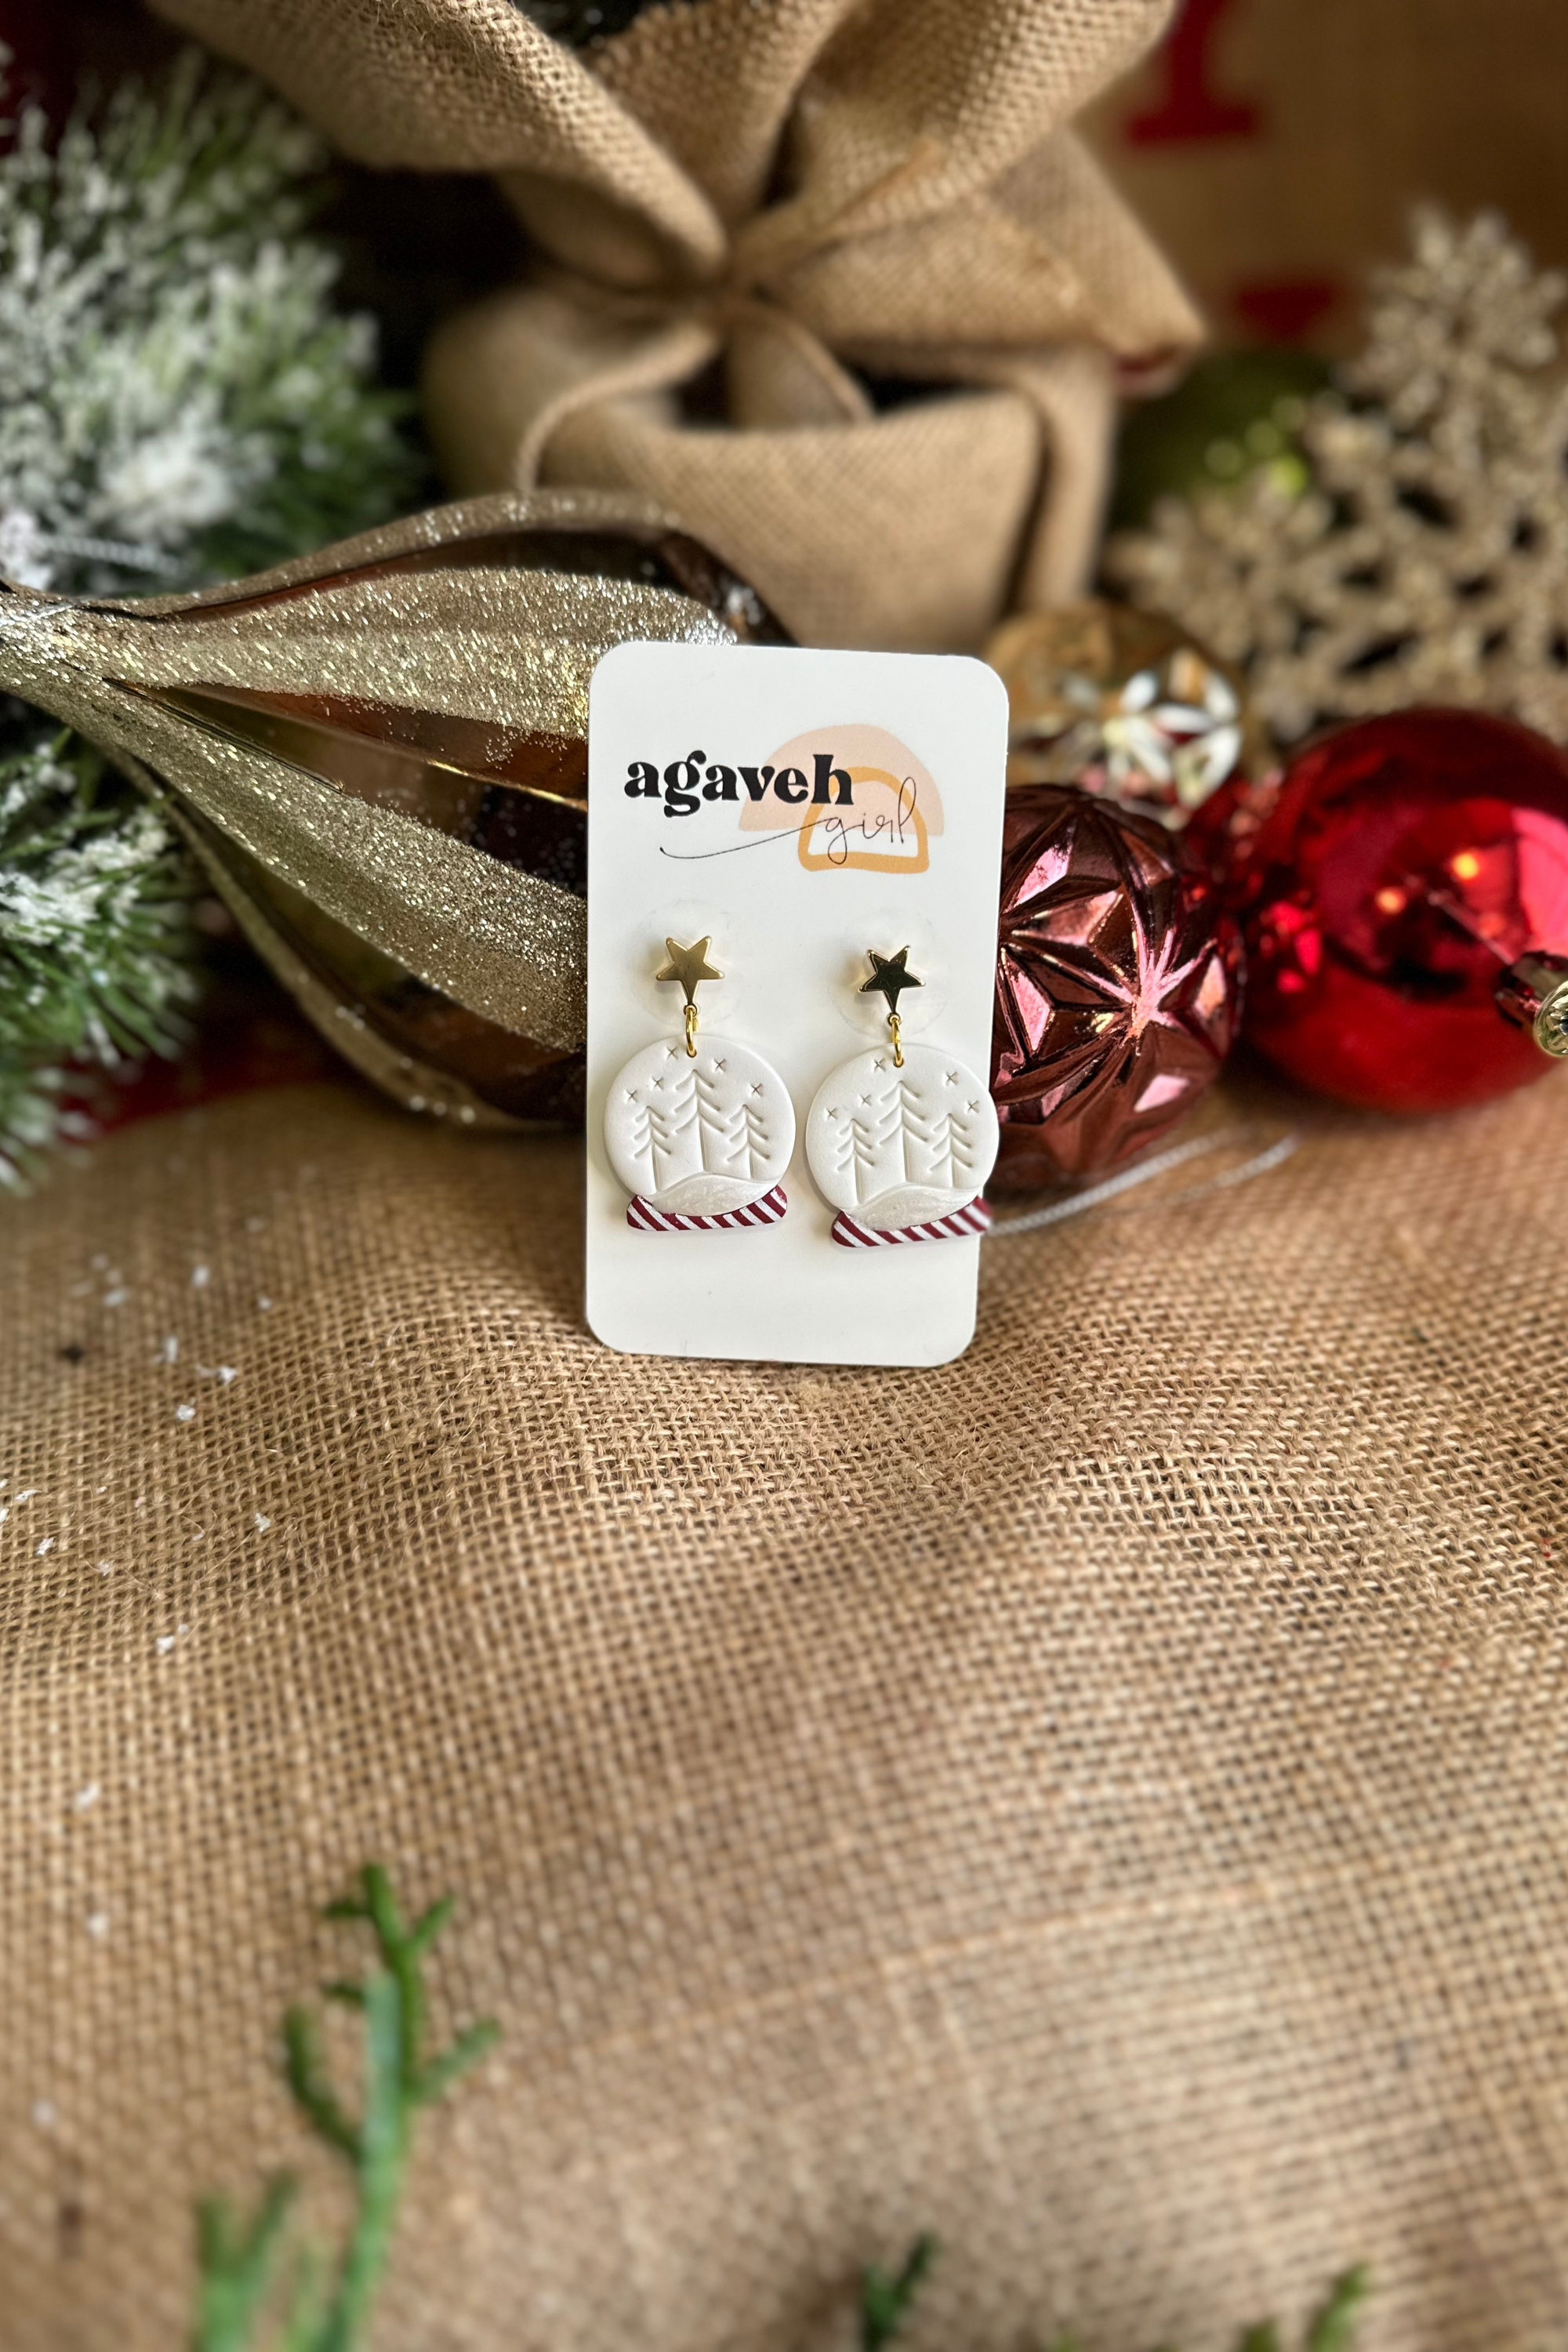 Agaveh Girl SnowGlobe Dangle Earrings